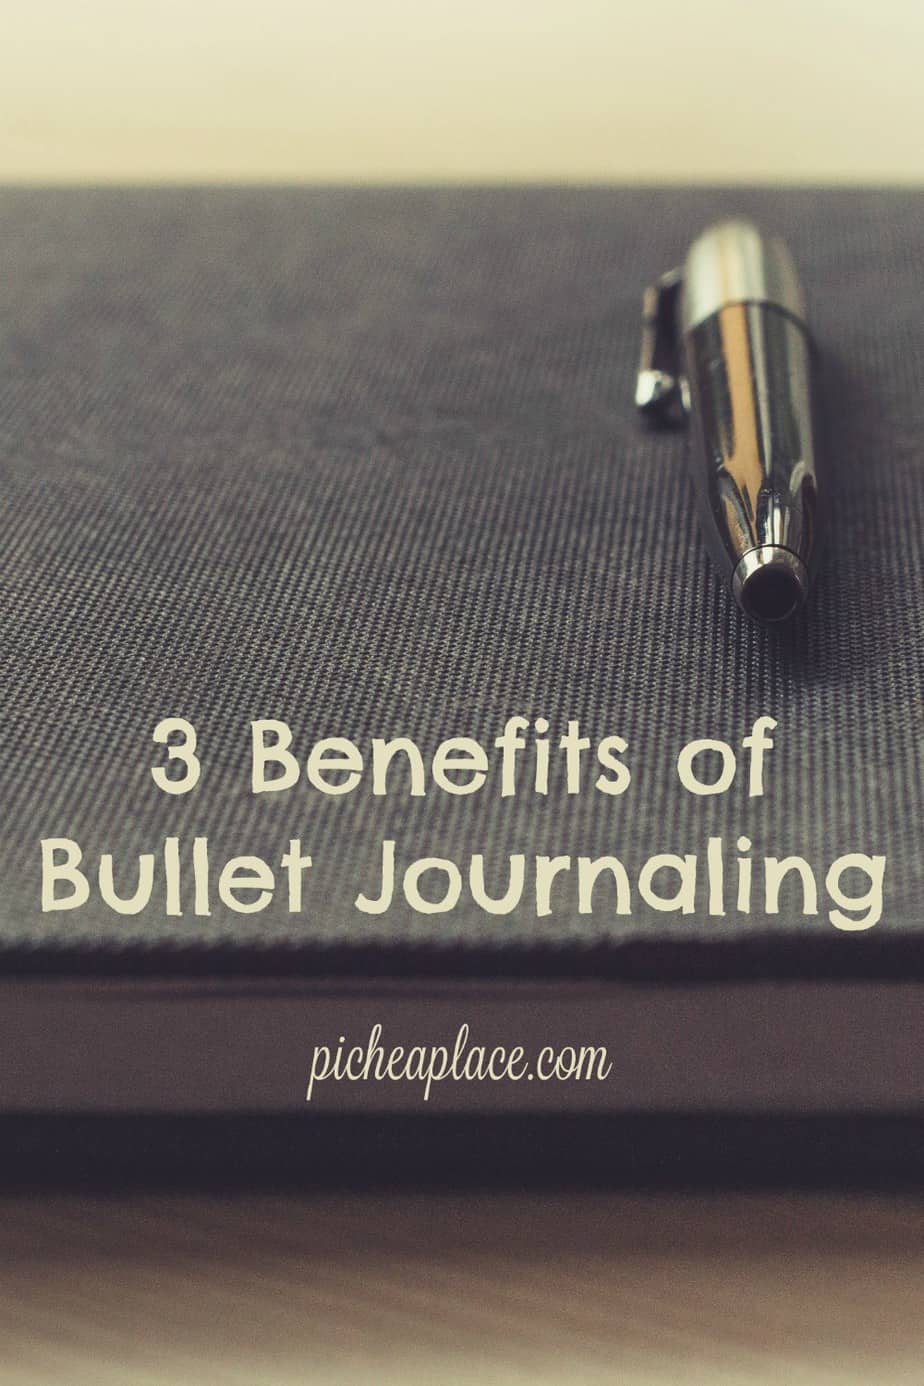 3 Benefits of Bullet Journaling